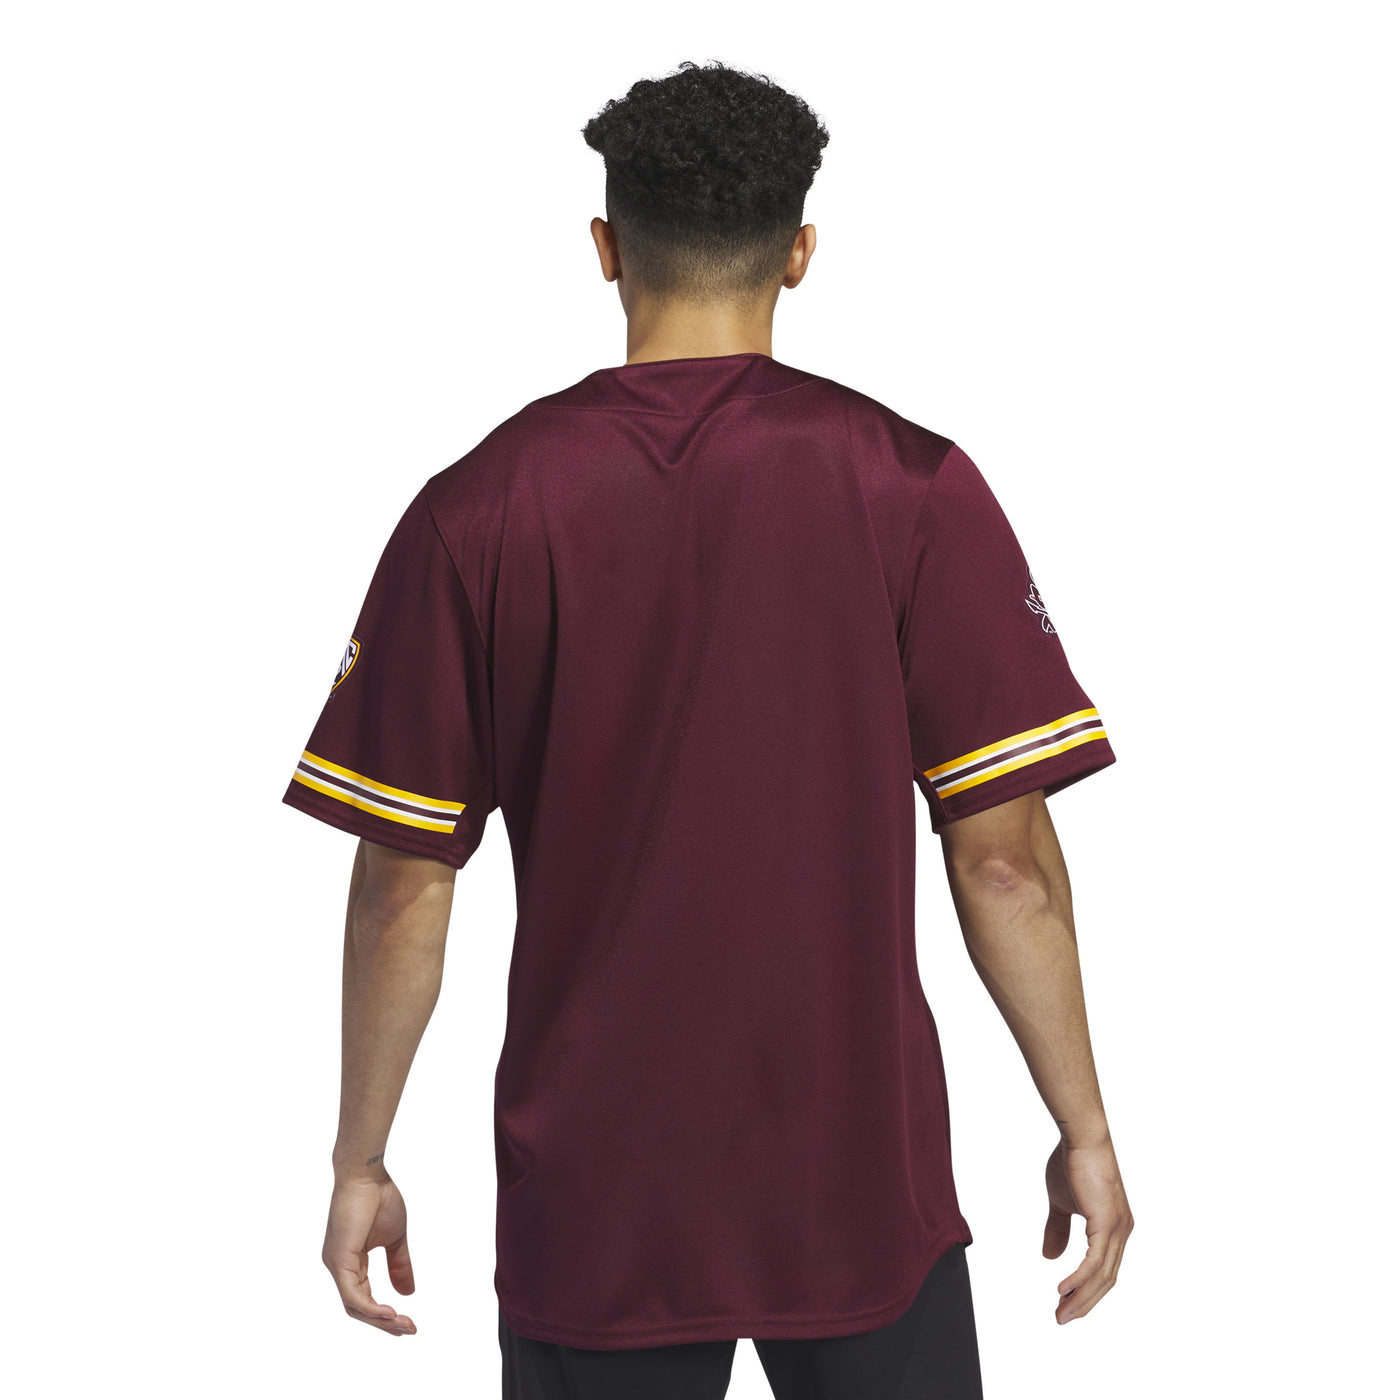 Backside of ASU maroon baseball jersey